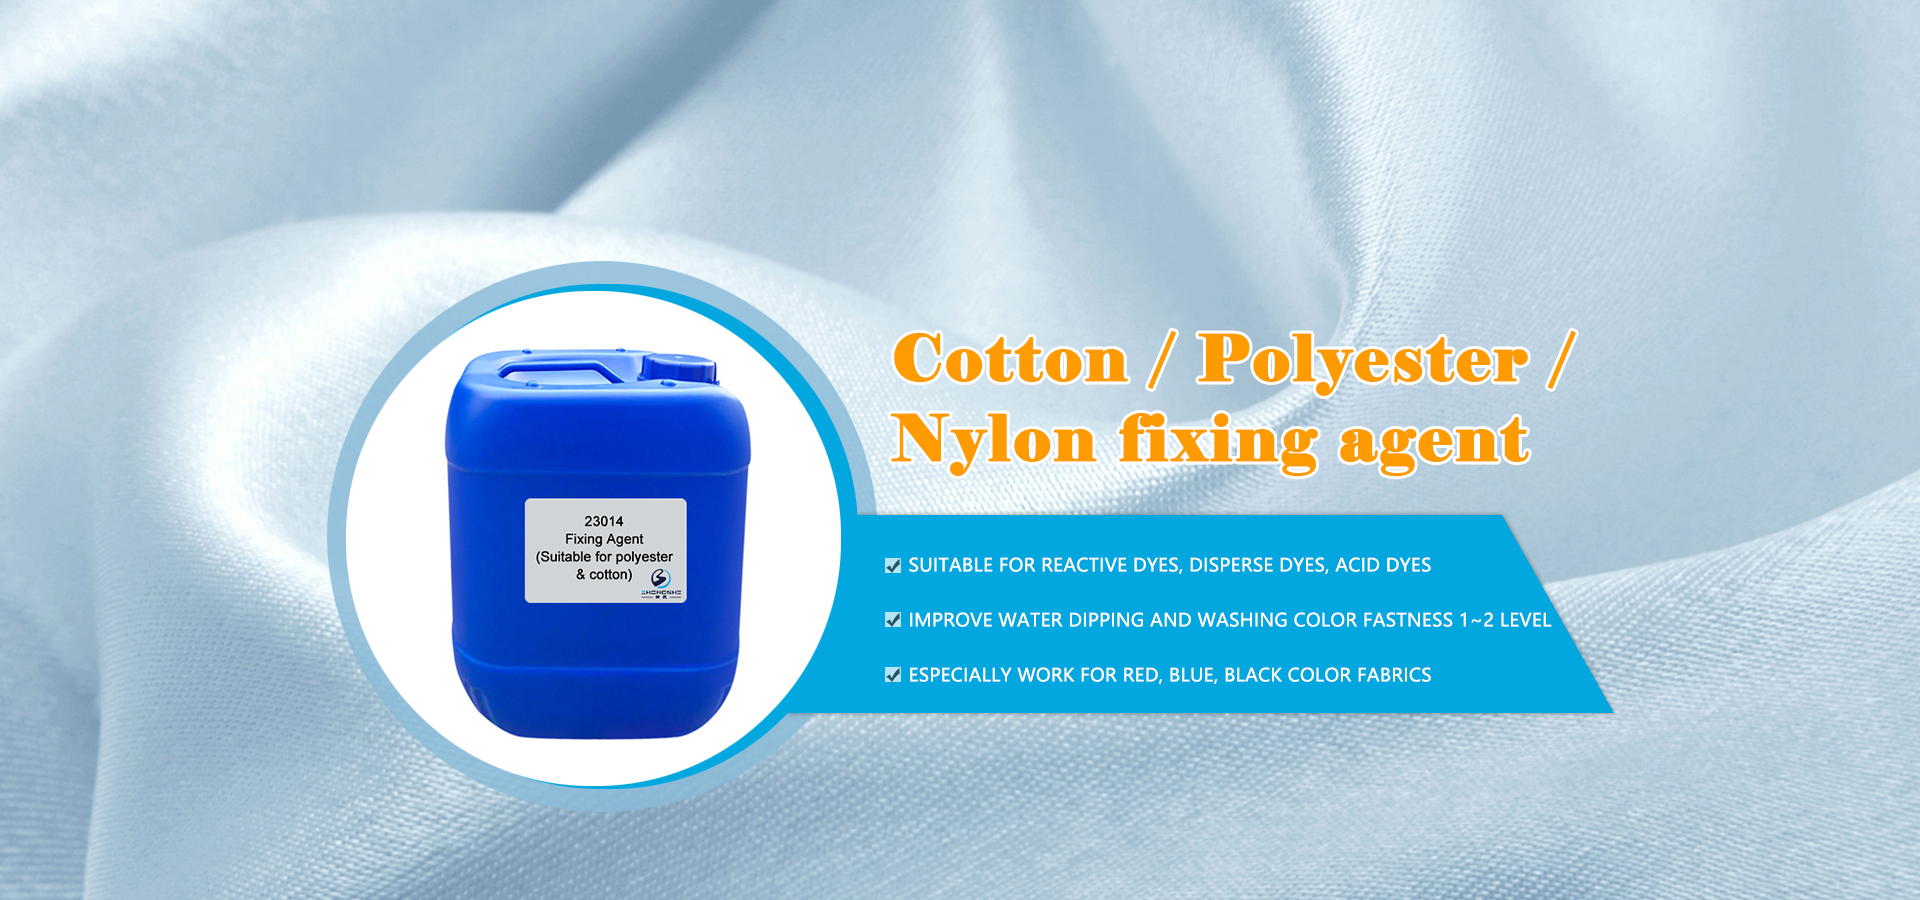 Cotton / Polyester / Nylon fixing agent